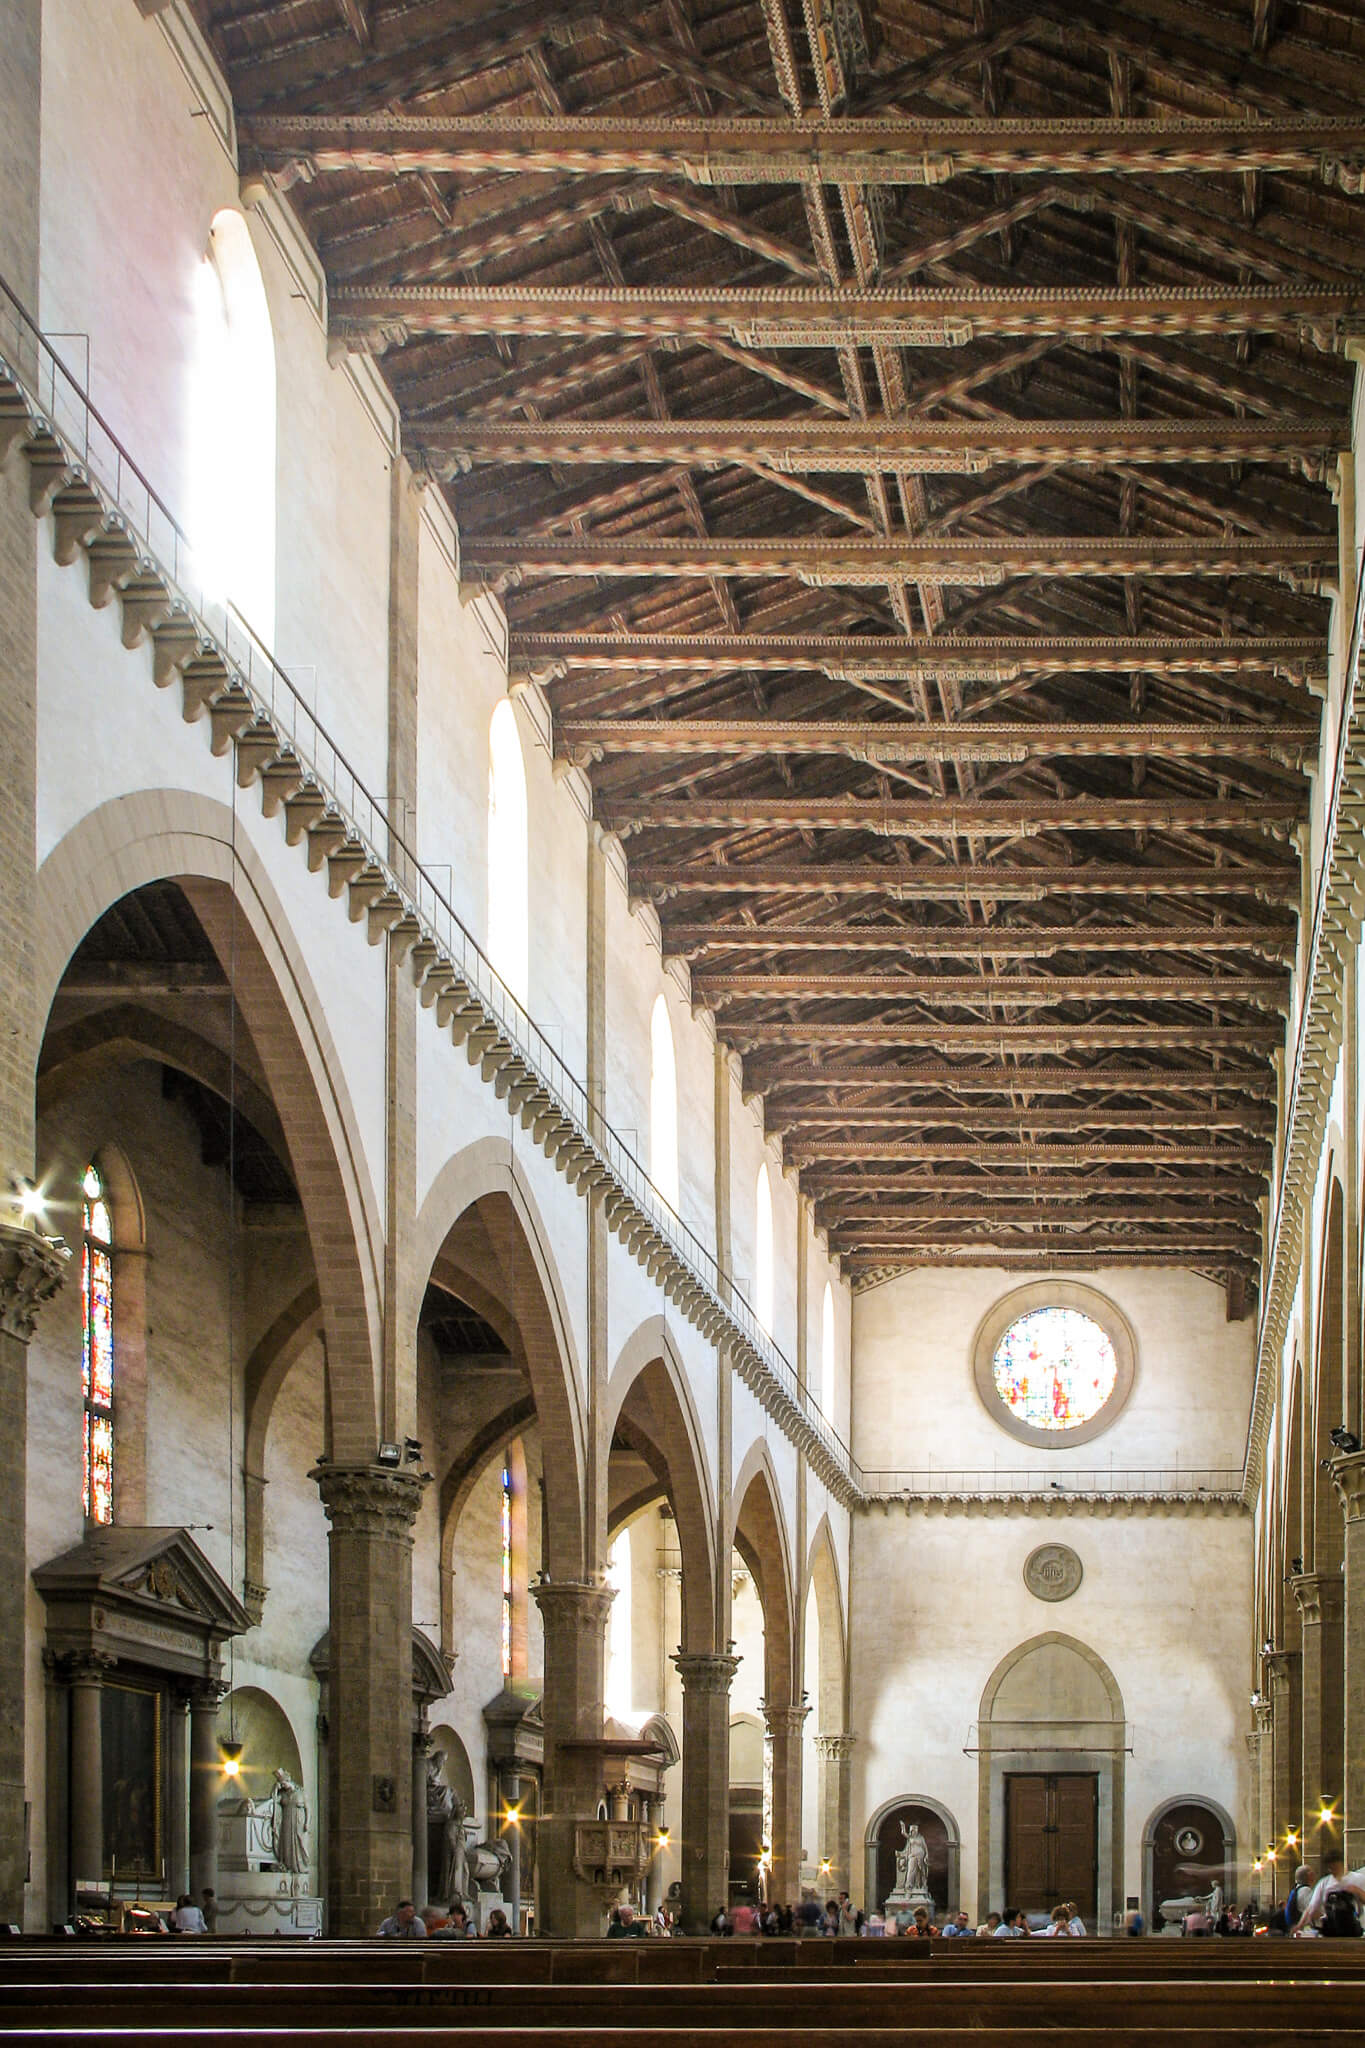 Interior of the Santa Croce basilica in Florence